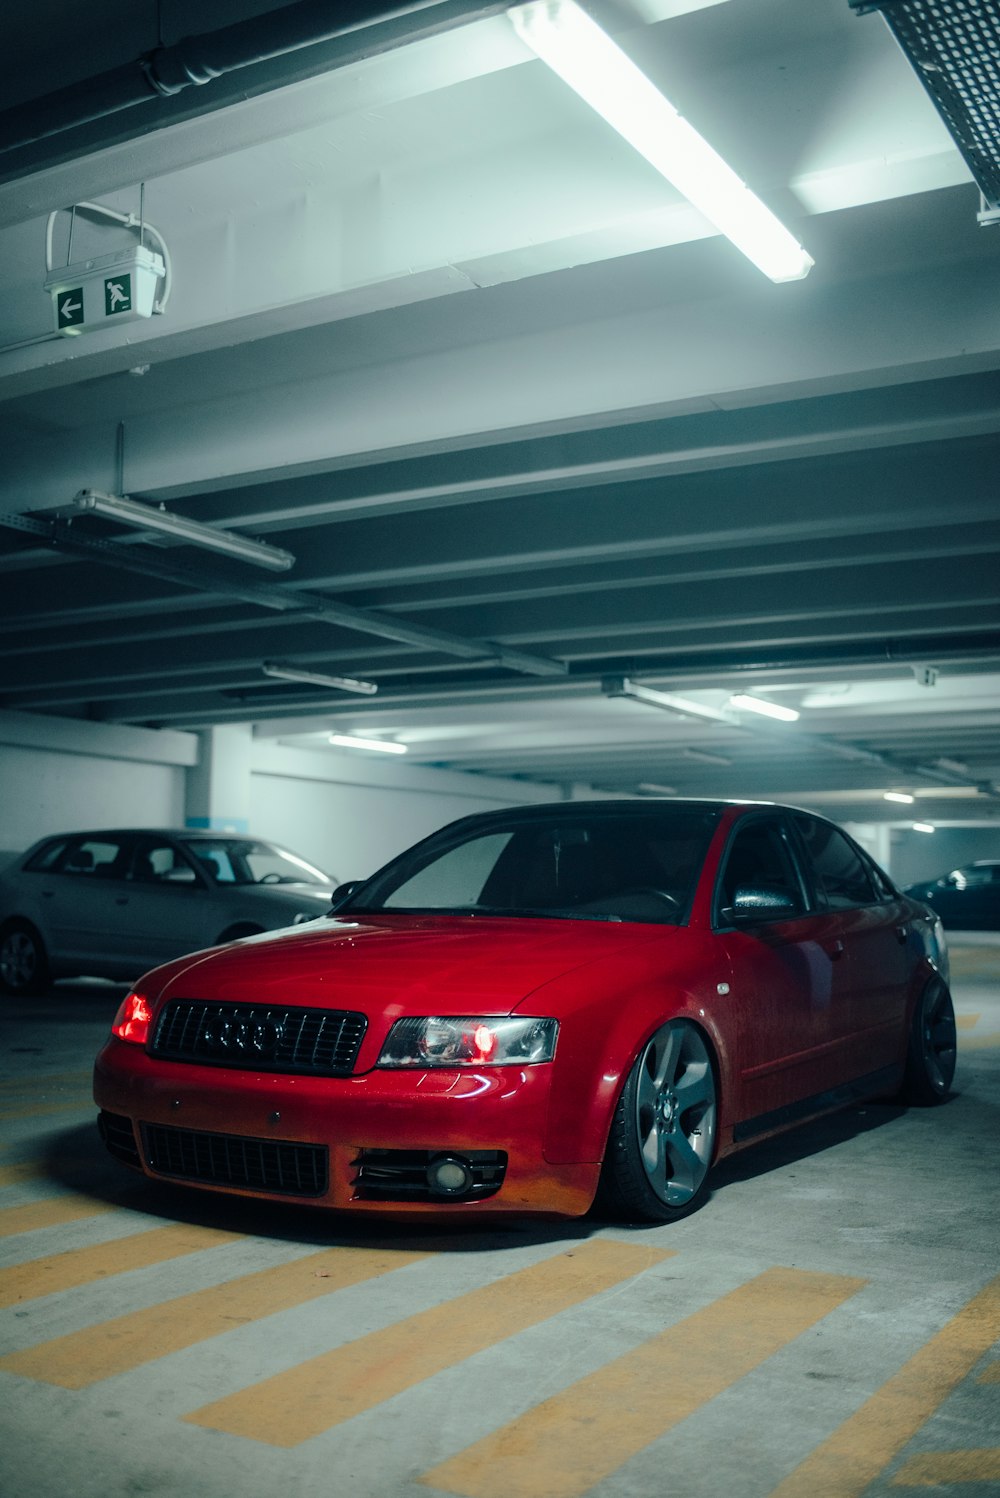 a red car parked in a parking garage